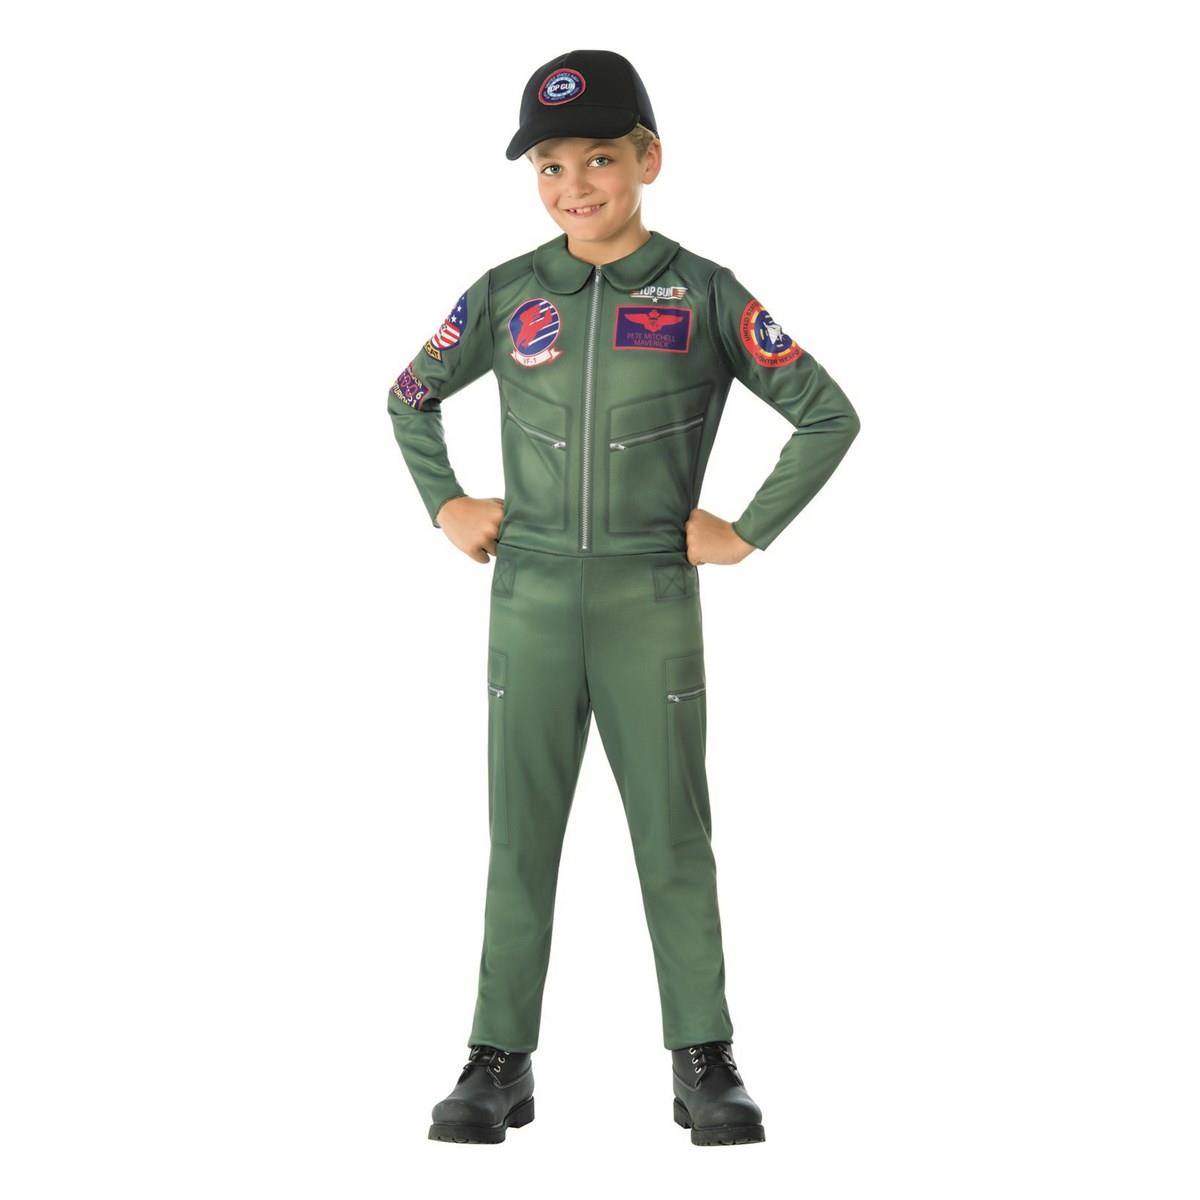 279172 Top Gun Childrens Costume, Small